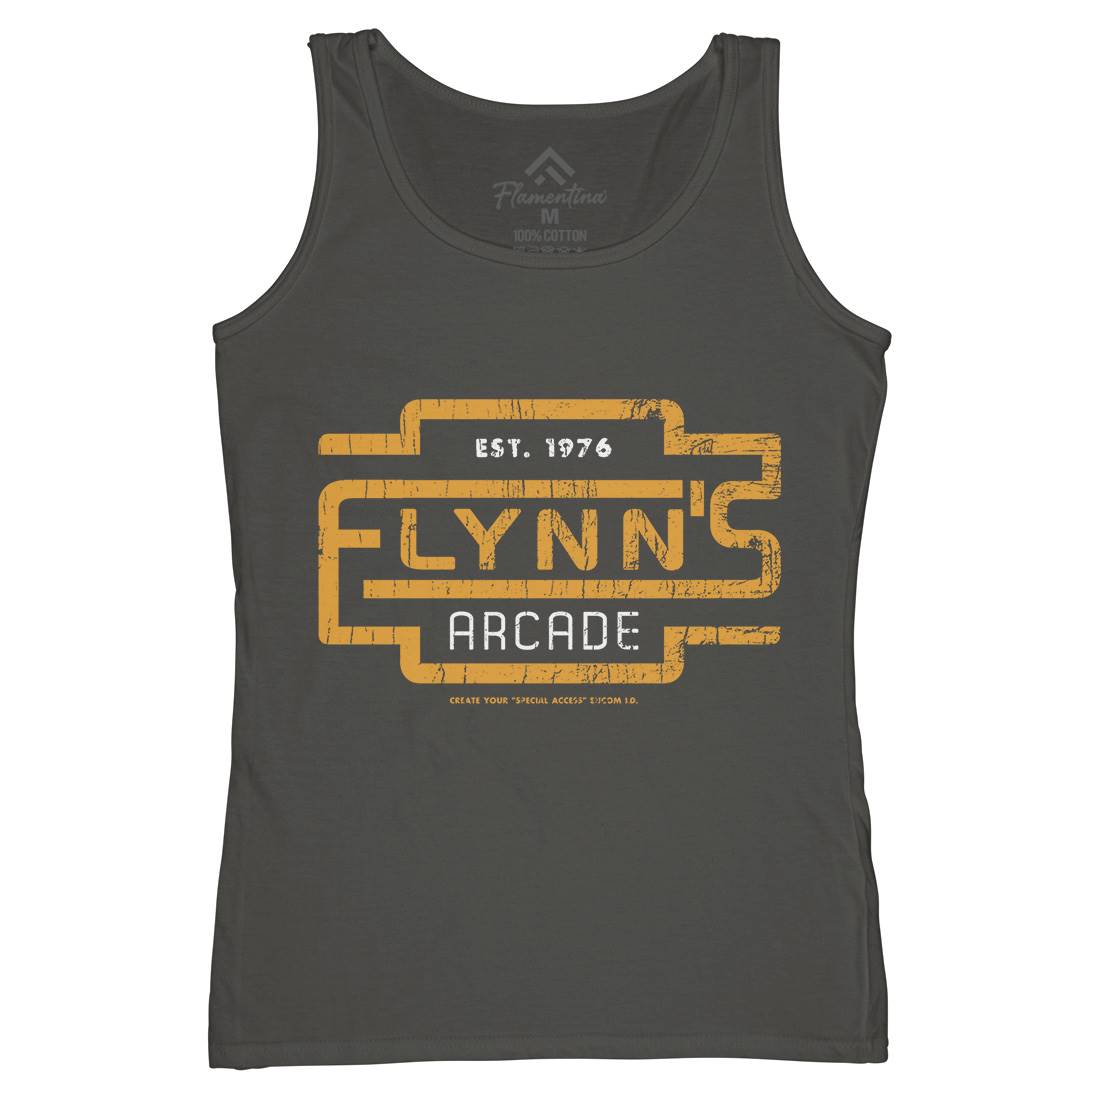 Flynns Arcade Womens Organic Tank Top Vest Space D277